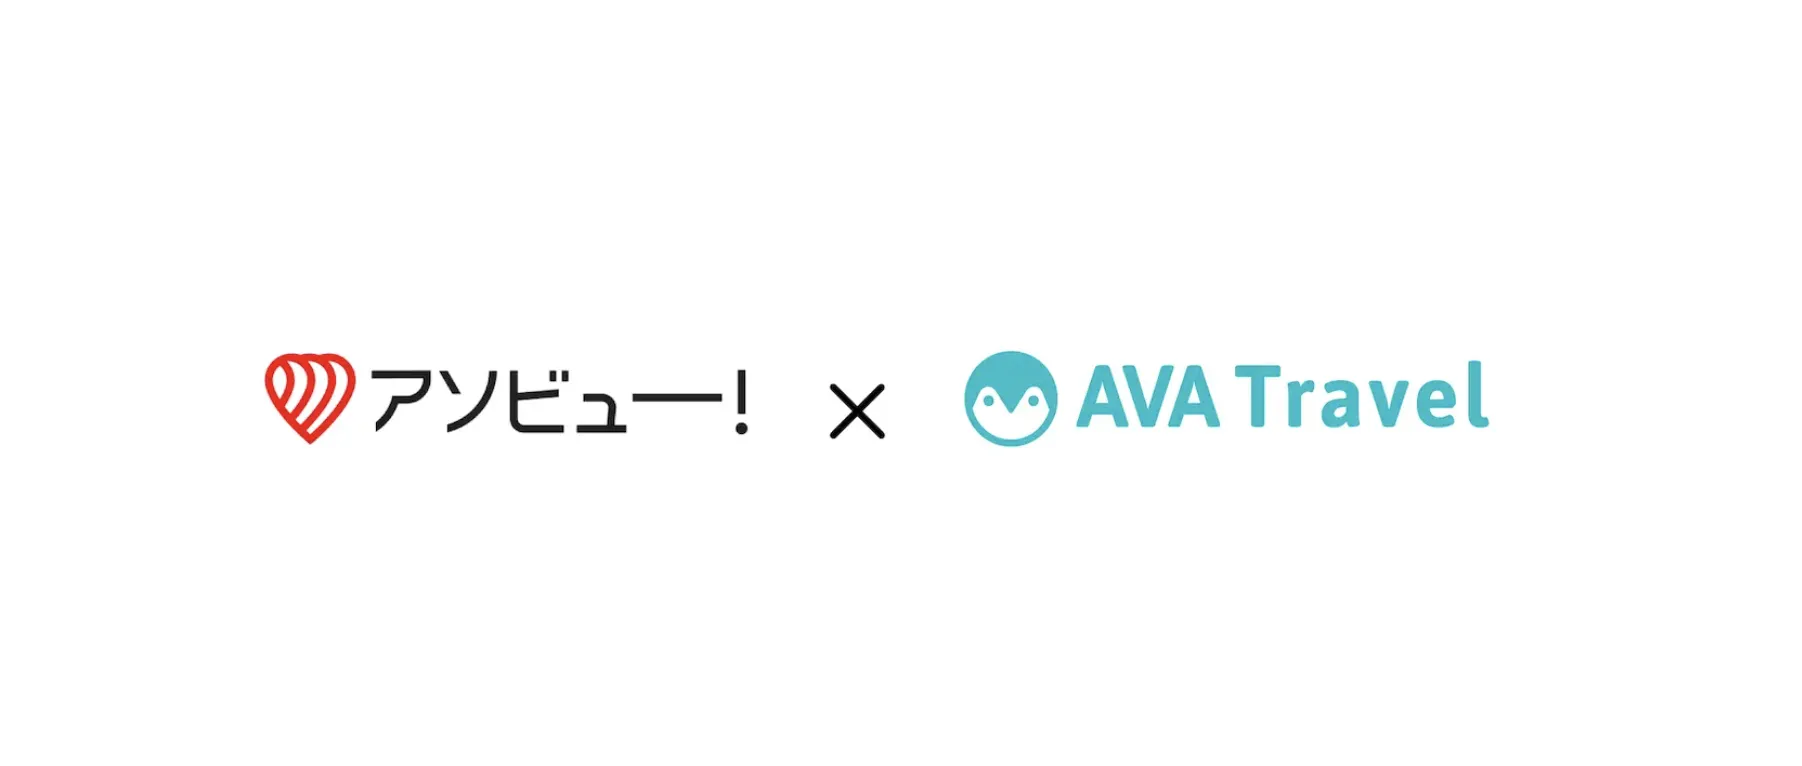 AIが提案するオーダーメイド旅行体験 - AVA Travelがアソビューと連携強化